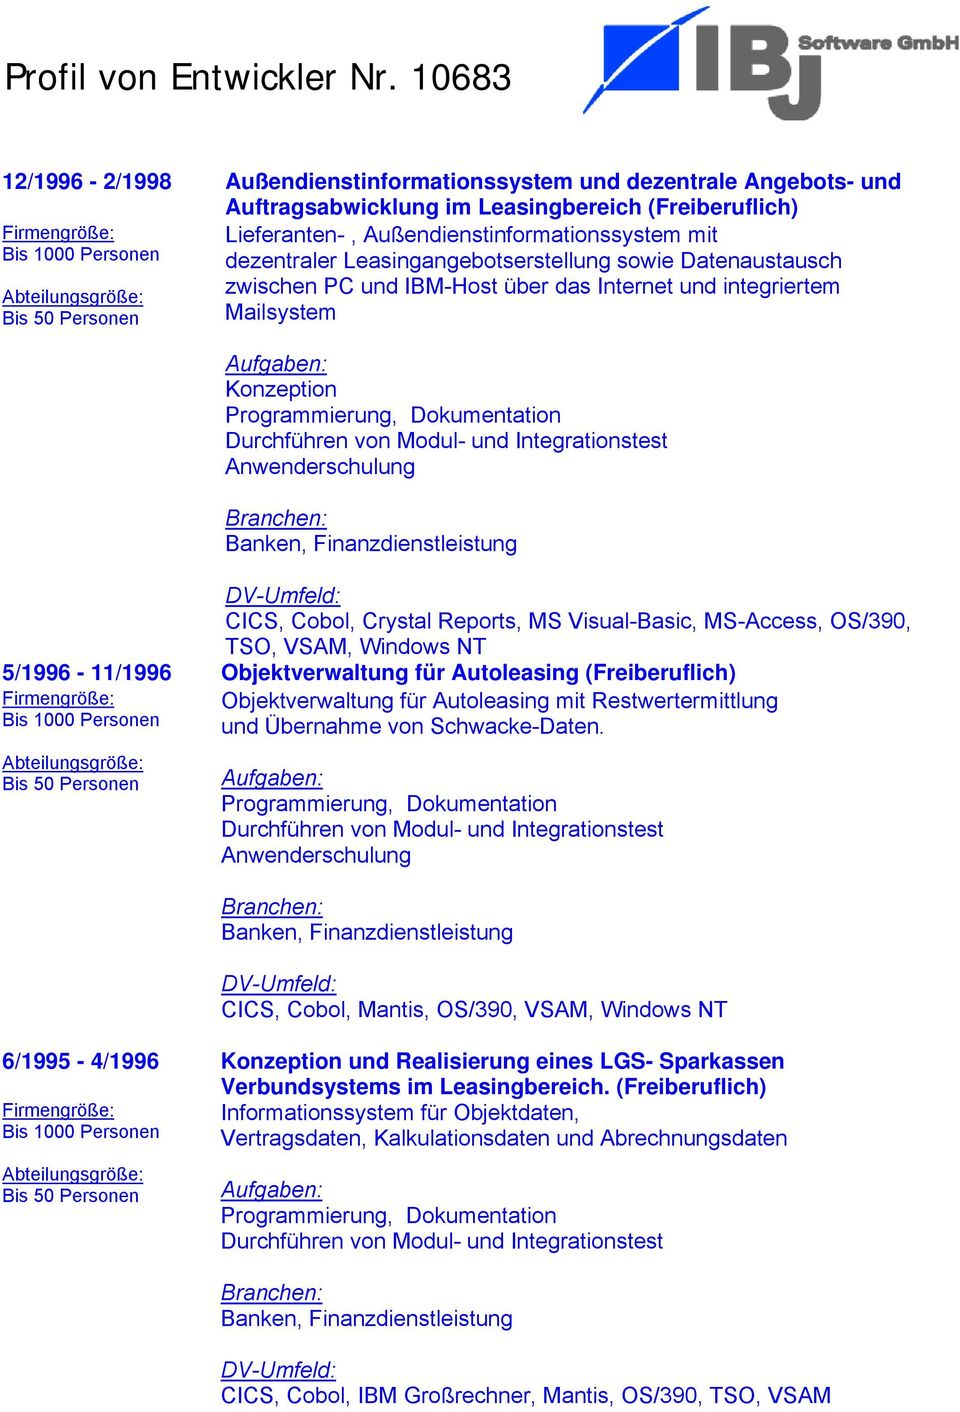 Reports, MS Visual-Basic, MS-Access, OS/390, TSO, VSAM, Windows NT 5/1996-11/1996 Objektverwaltung für Autoleasing (Freiberuflich) Objektverwaltung für Autoleasing mit Restwertermittlung und